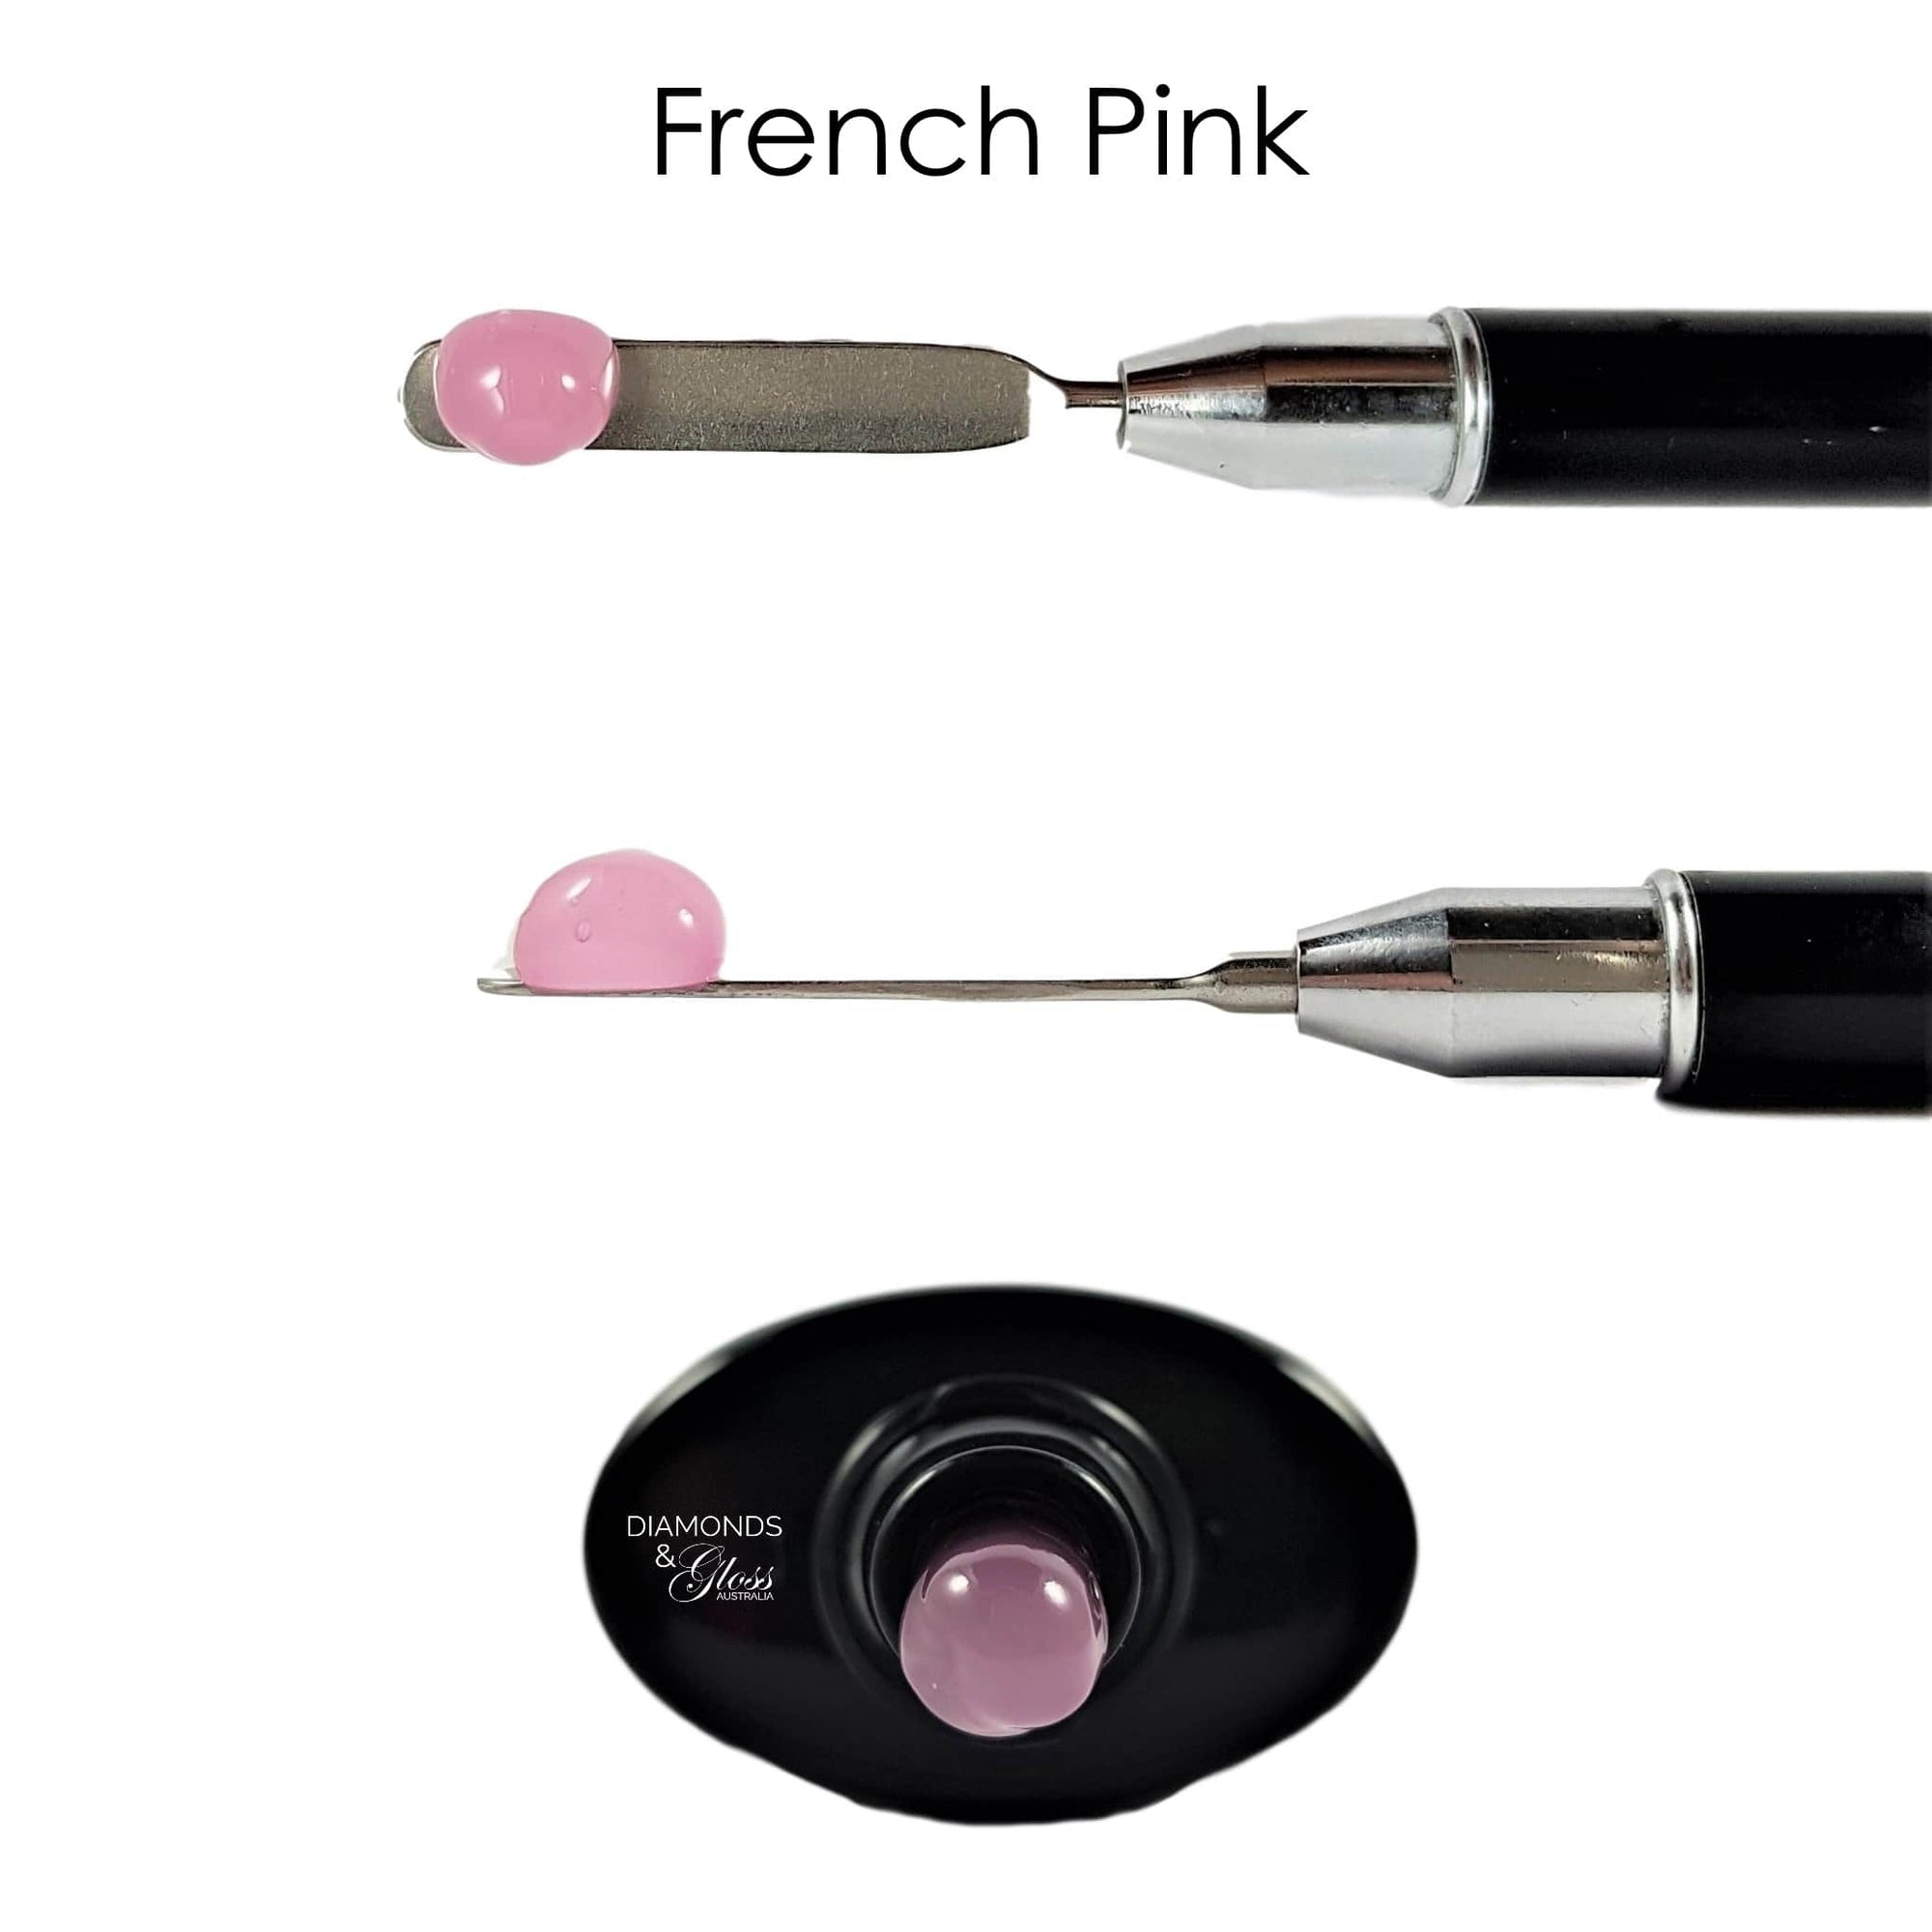 French Pink Polygel Hema Free Diamonds & Gloss Australia Polygel Nails at Home